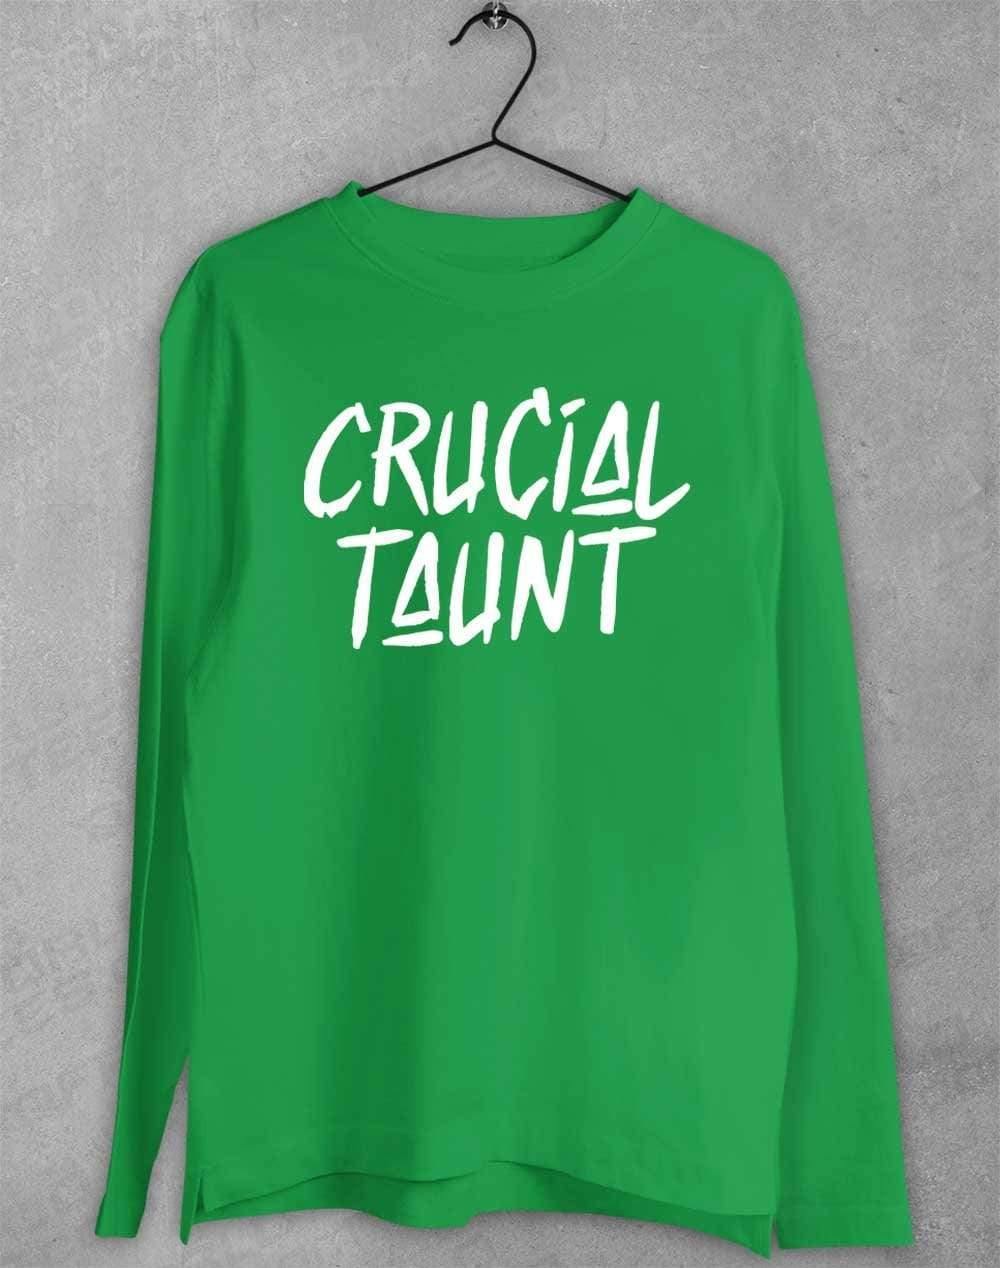 Crucial Taunt Long Sleeve T-Shirt S / Irish Green  - Off World Tees